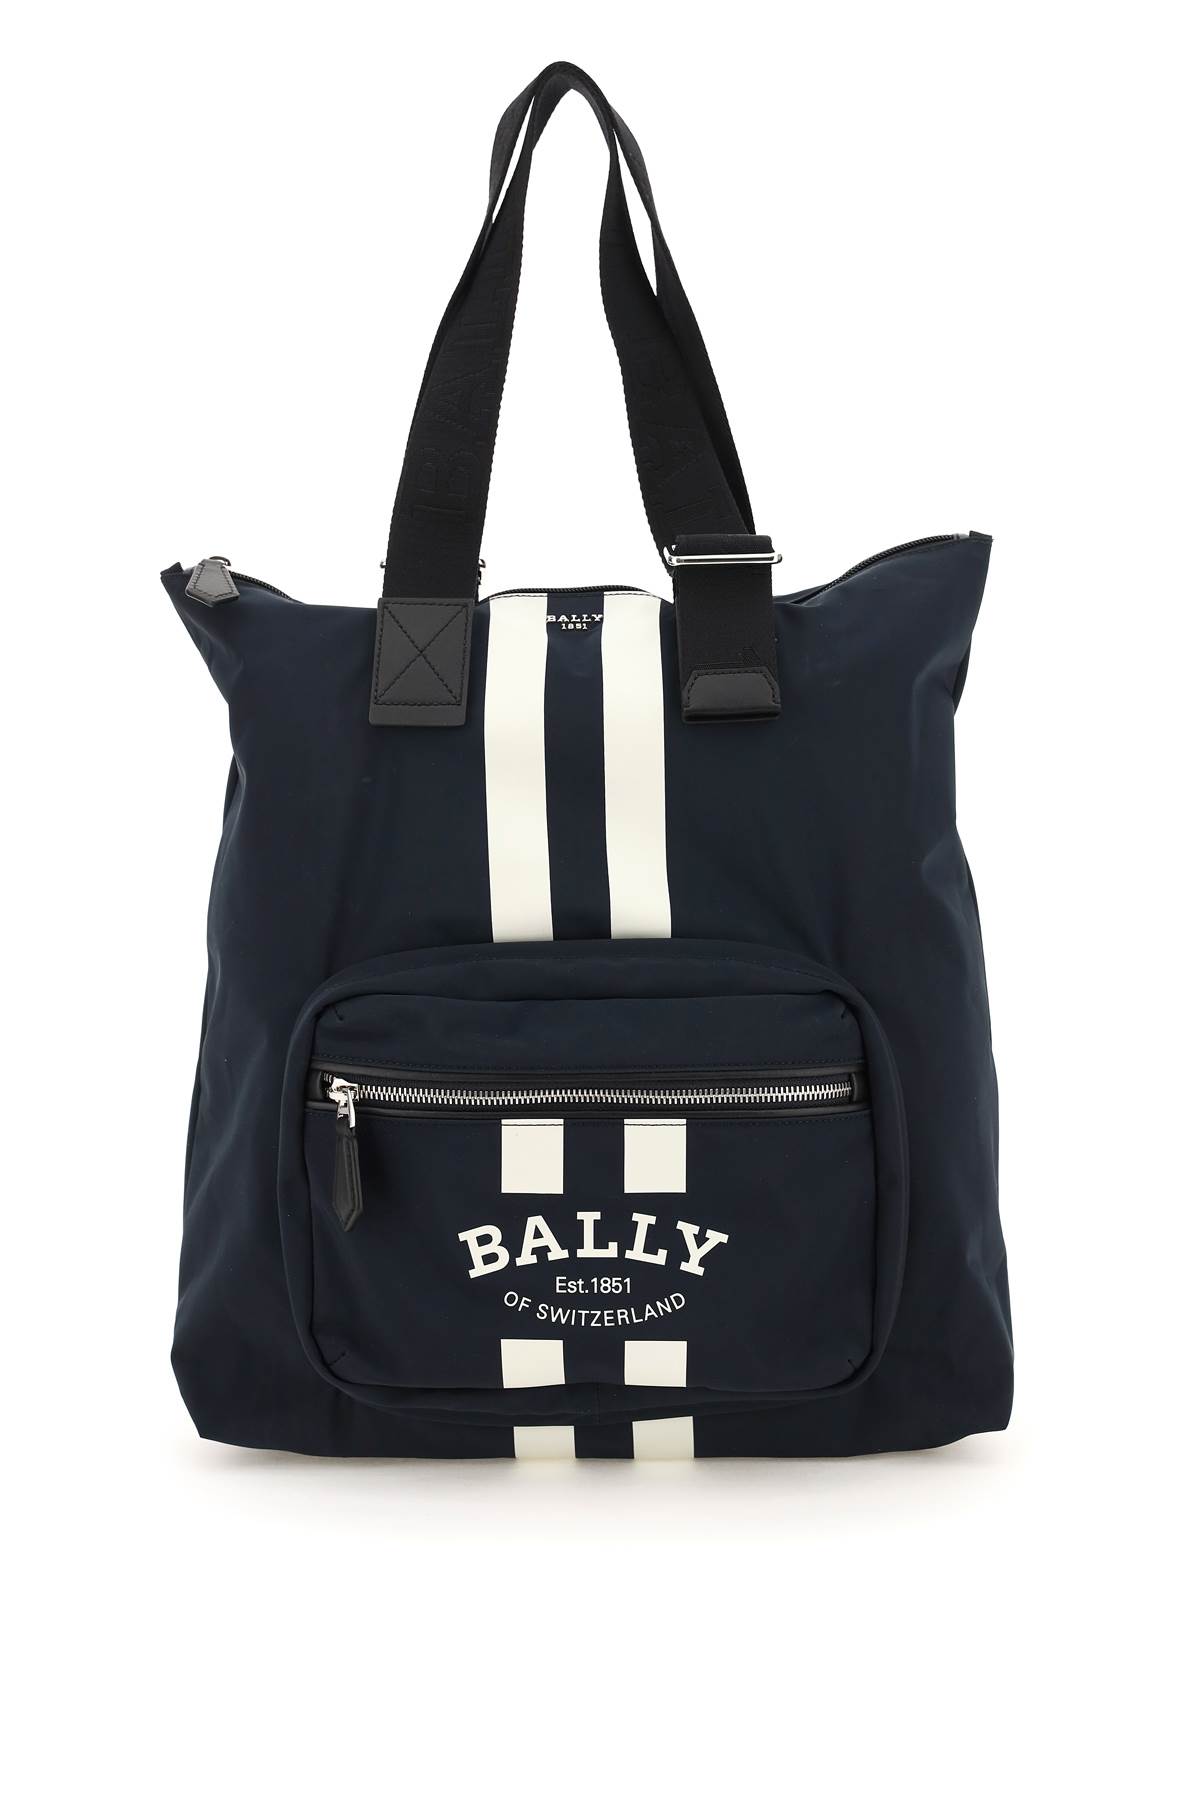 Bally Fallie Tote Bag